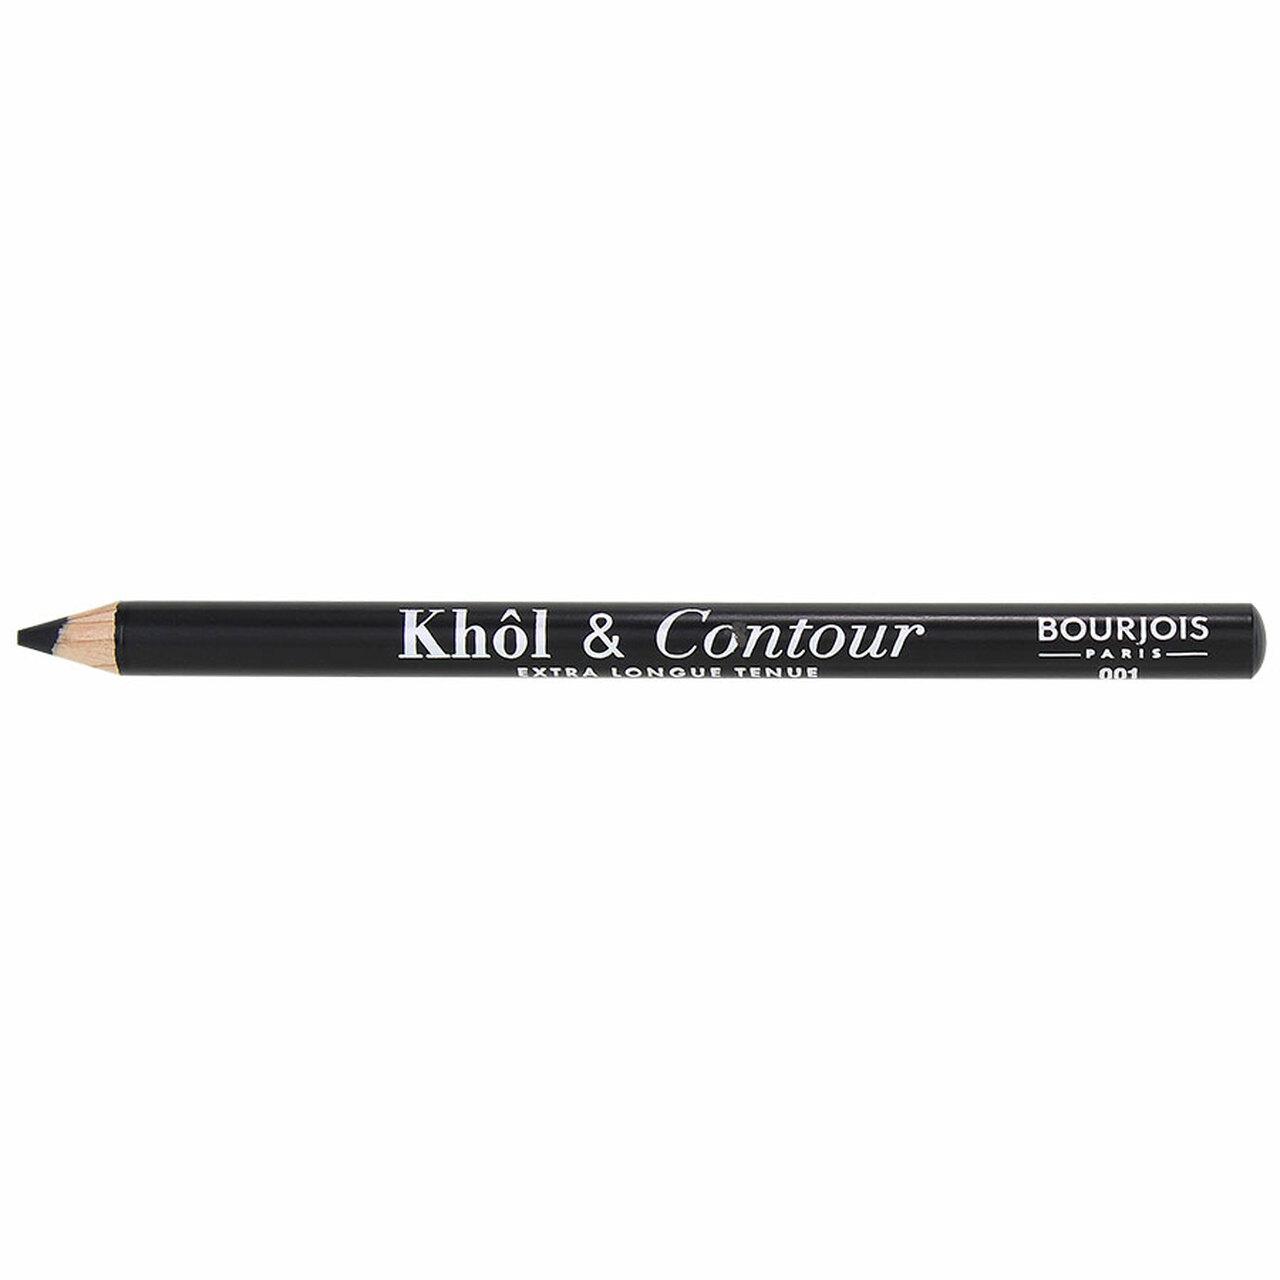 BOURJOIS Bourjois Khol & Contour Extra-Long Wear Олівець для очей 001